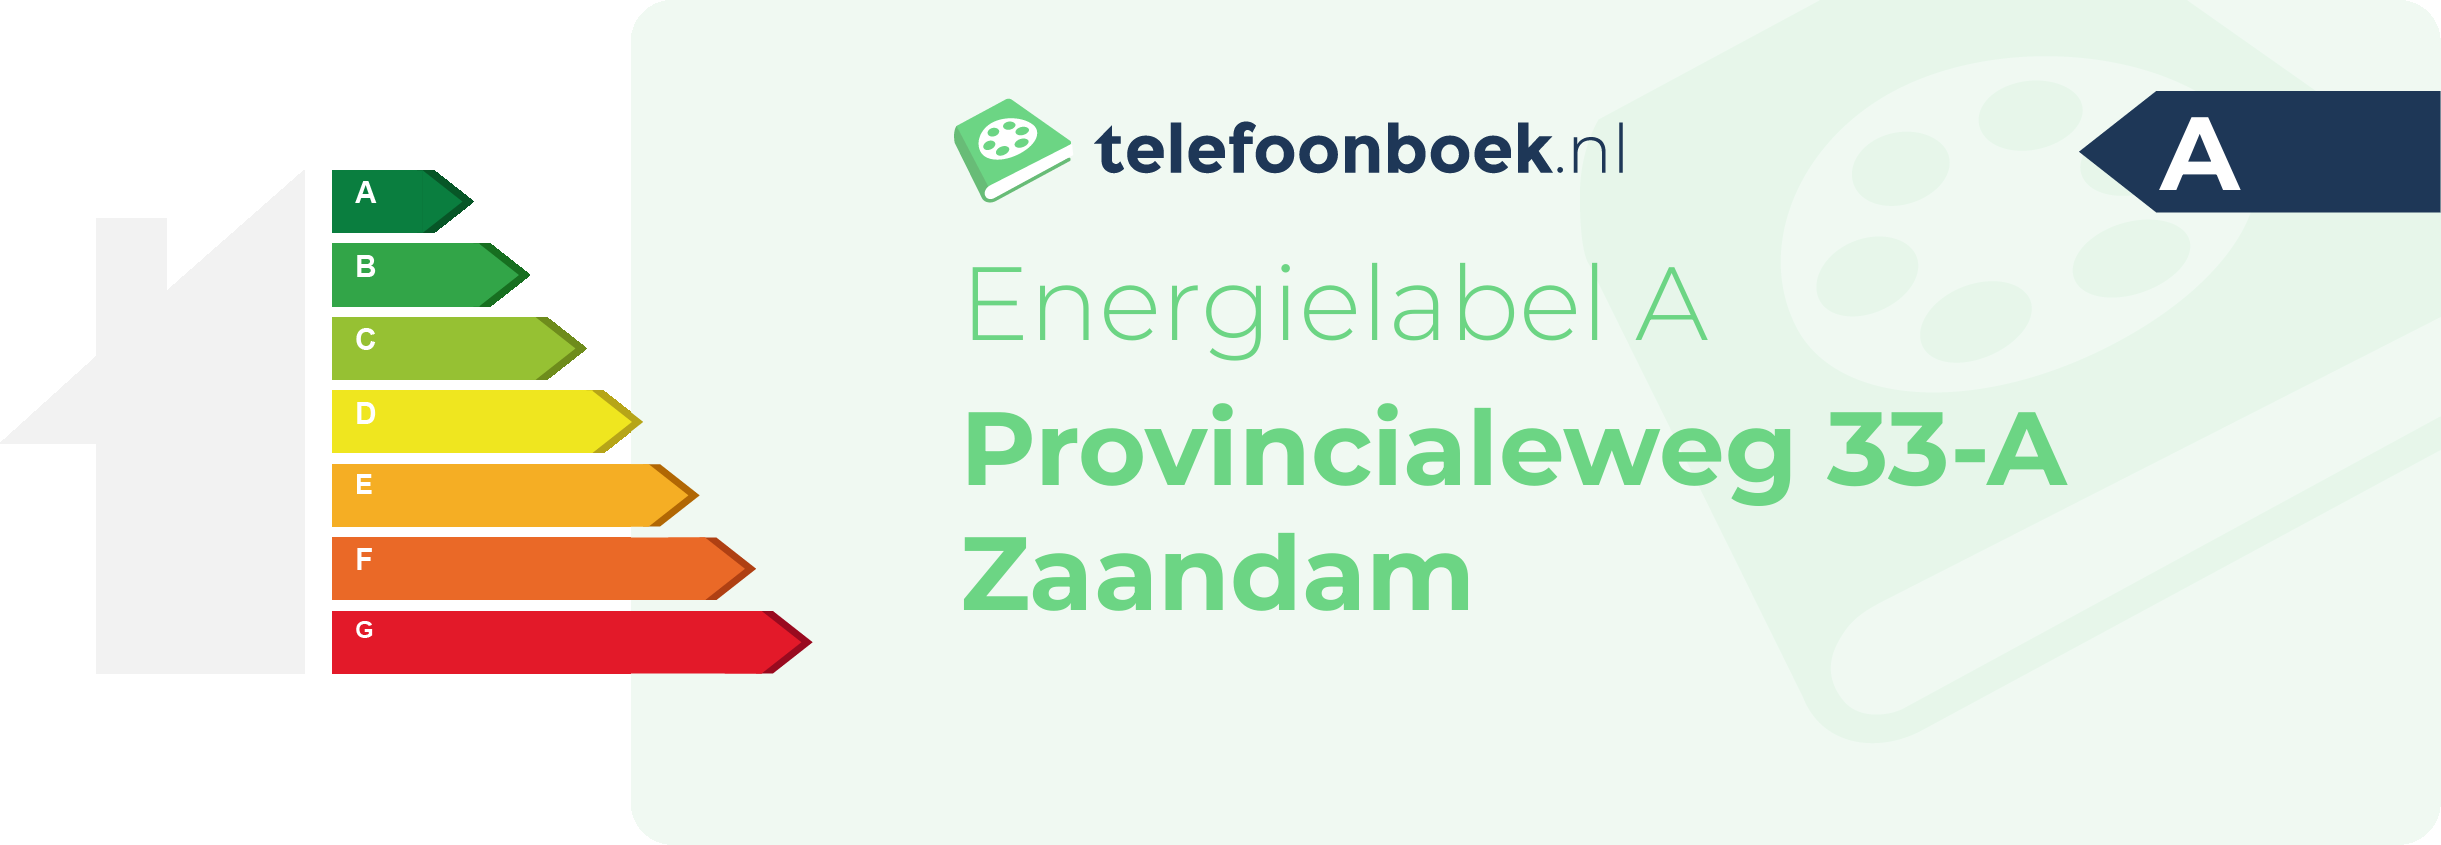 Energielabel Provincialeweg 33-A Zaandam